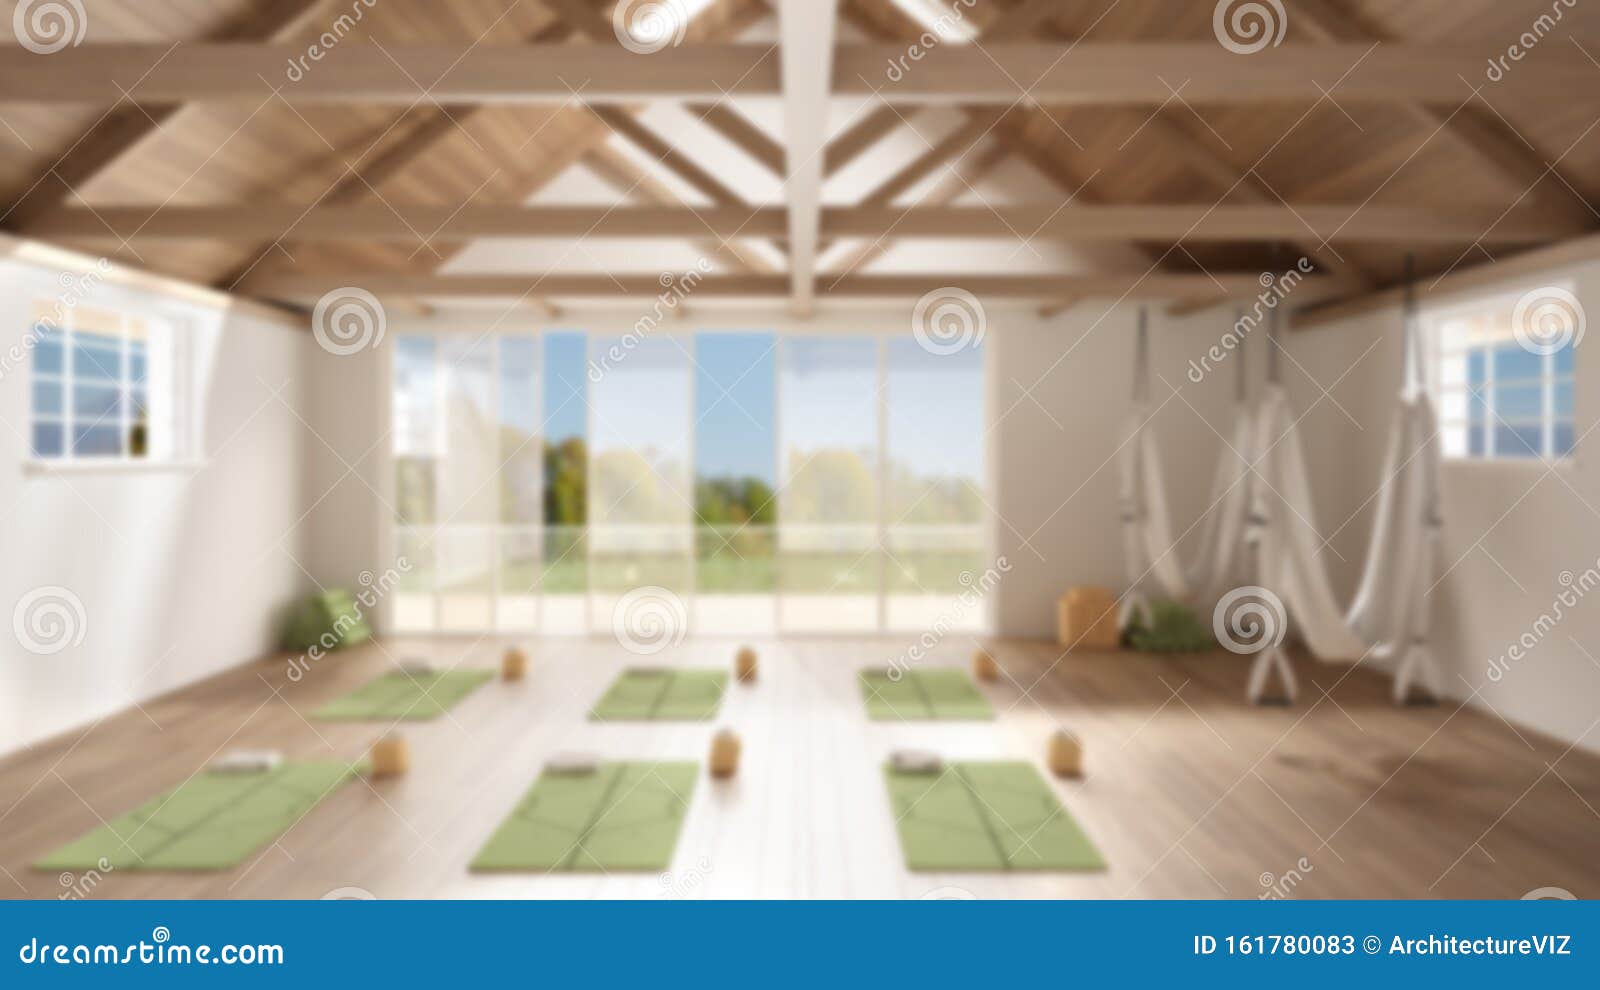 Empty yoga studio interior design, minimal open space with mats